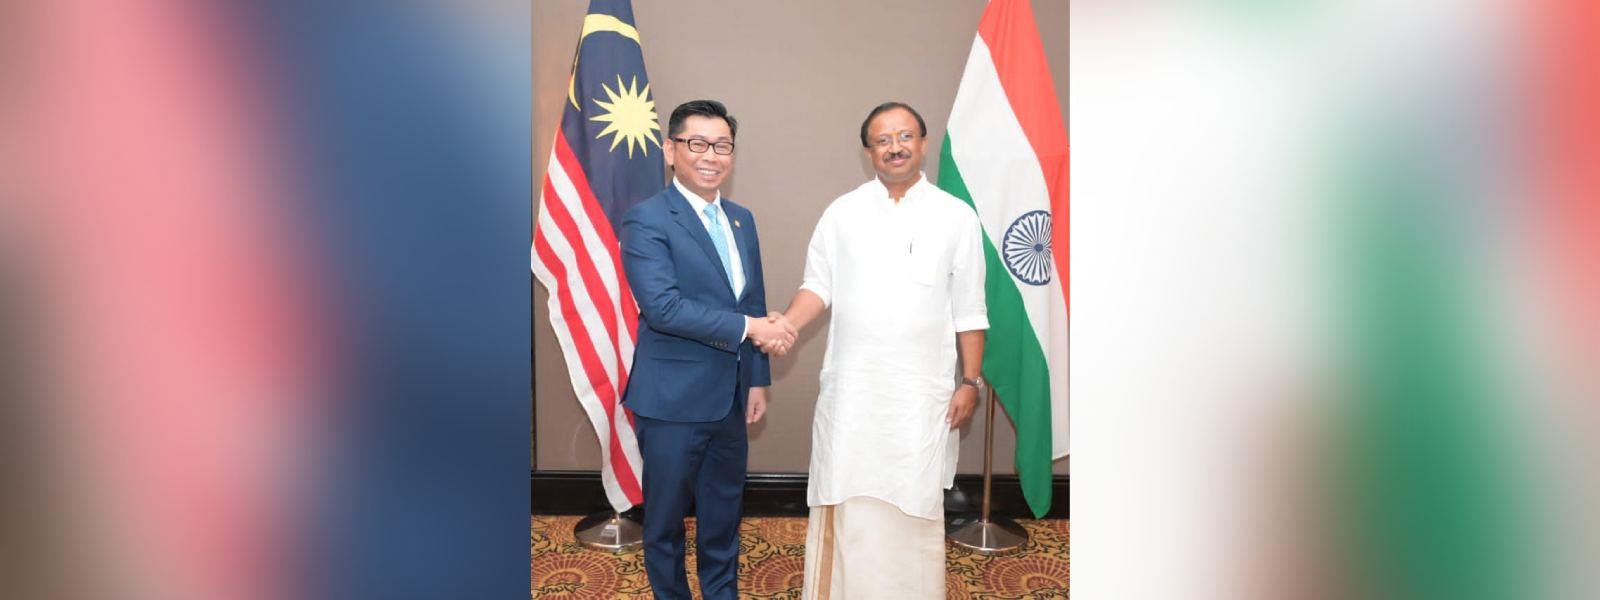 Minister of State for External Affairs Shri V. Muraleedharan met H.E. Mr. Datuk Mohamad Bin Haji Alamin, Deputy Minister of Foreign Affairs of Malaysia in Kuala Lumpur